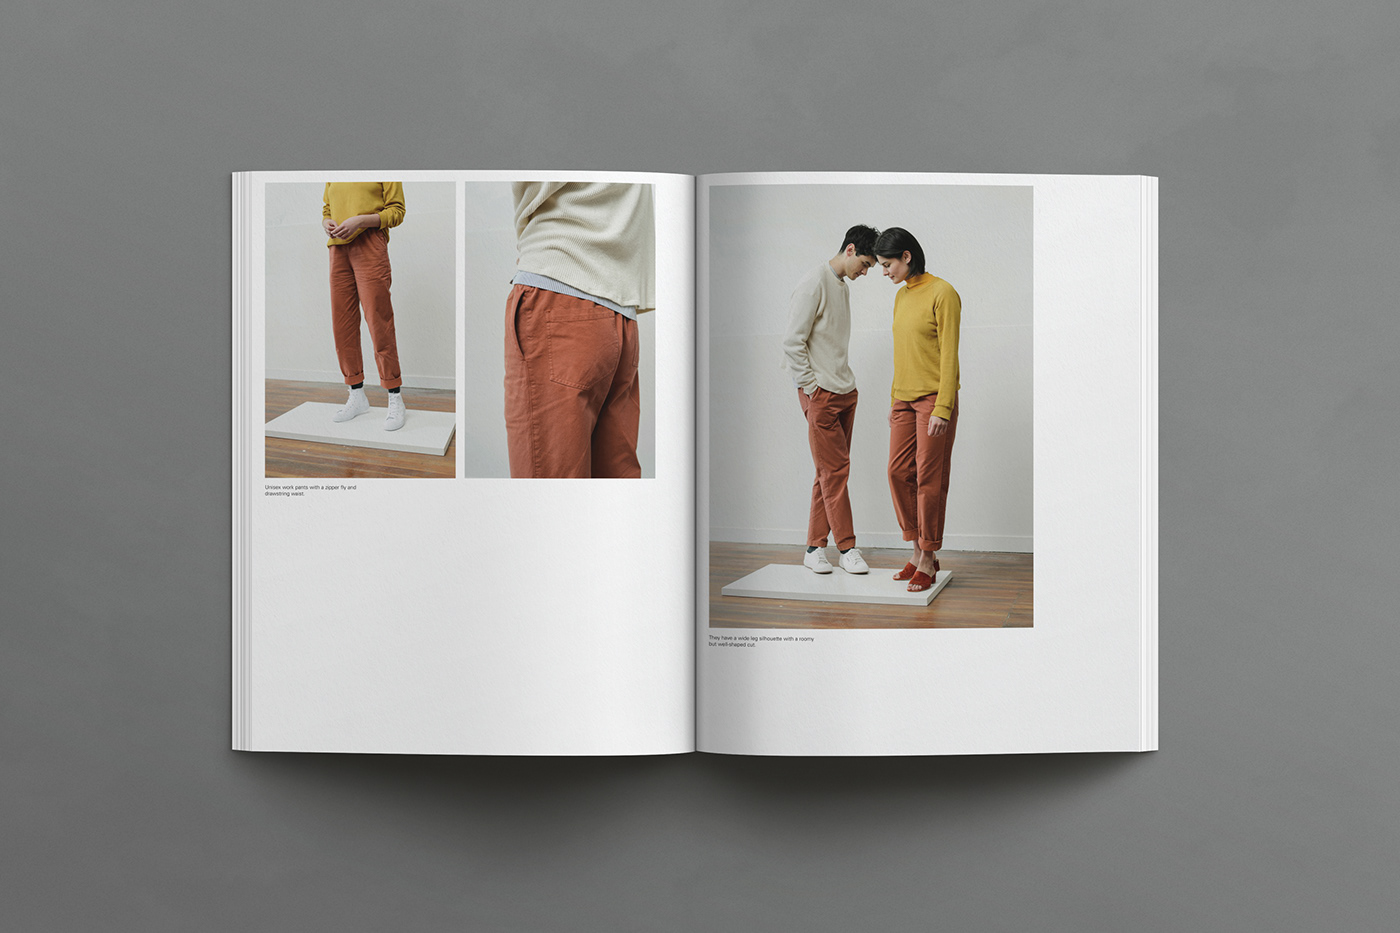 Adobe Portfolio editorial design  Bob Cut Mag Layout Design lifestyle magazine